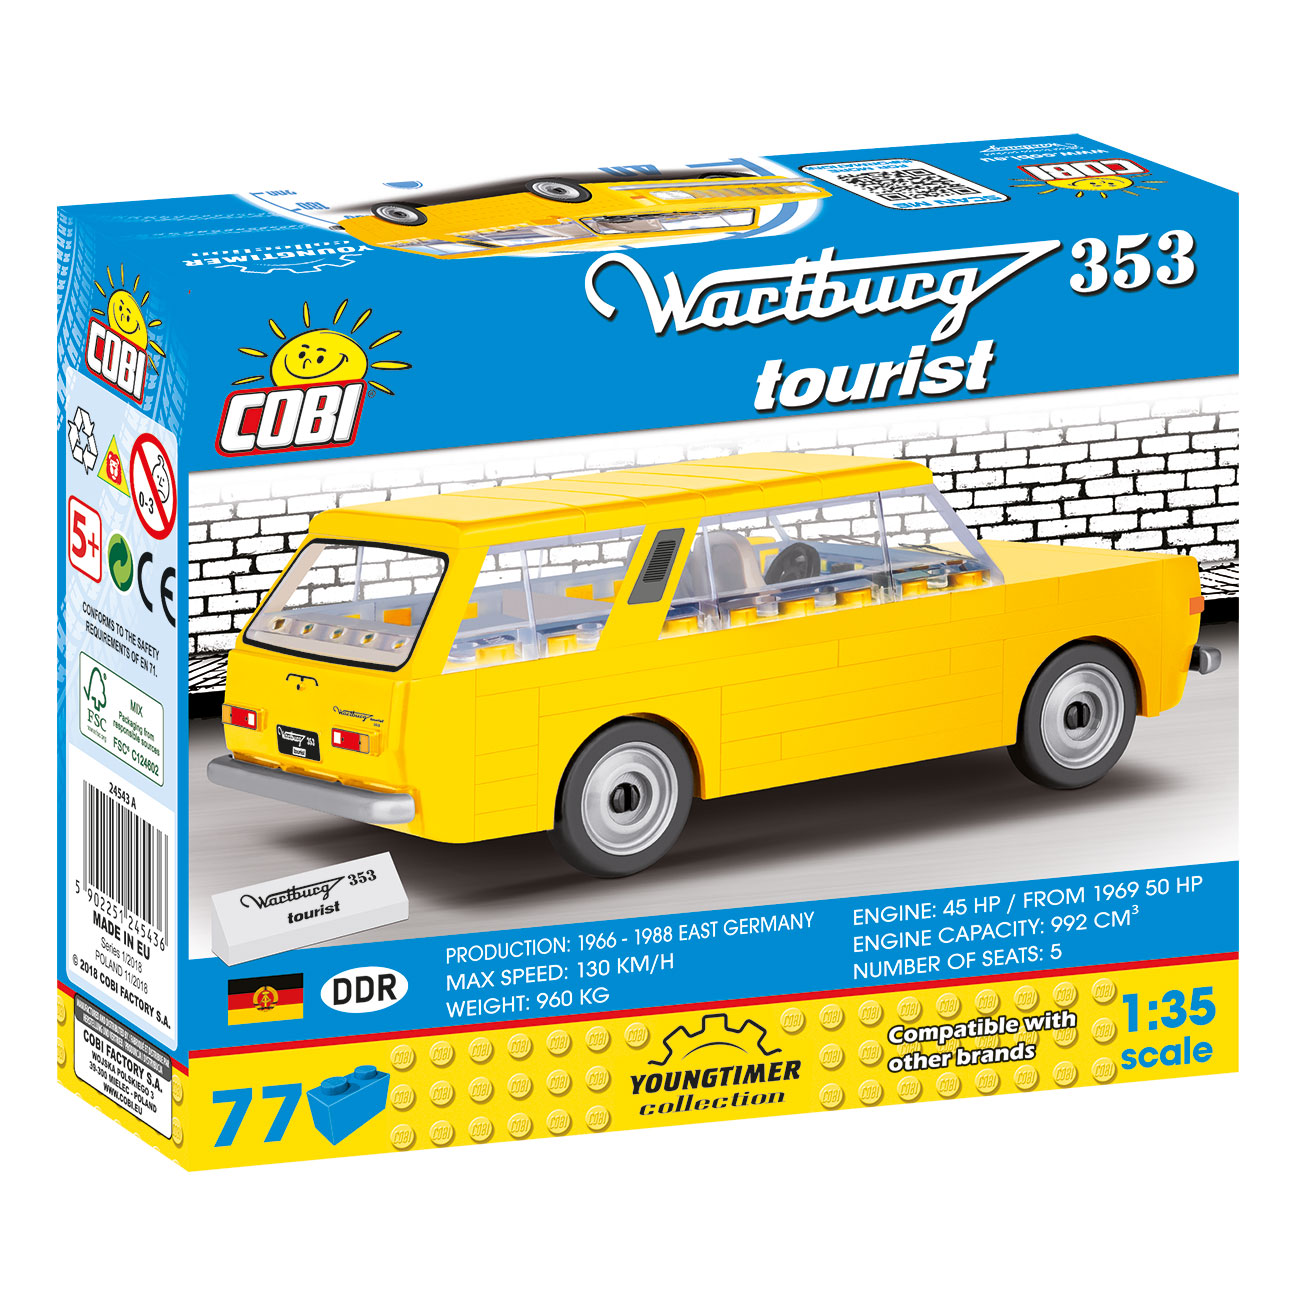 Cobi Youngtimer Collection Wartburg 353 tourist 77 Teile 24543A Bild 1